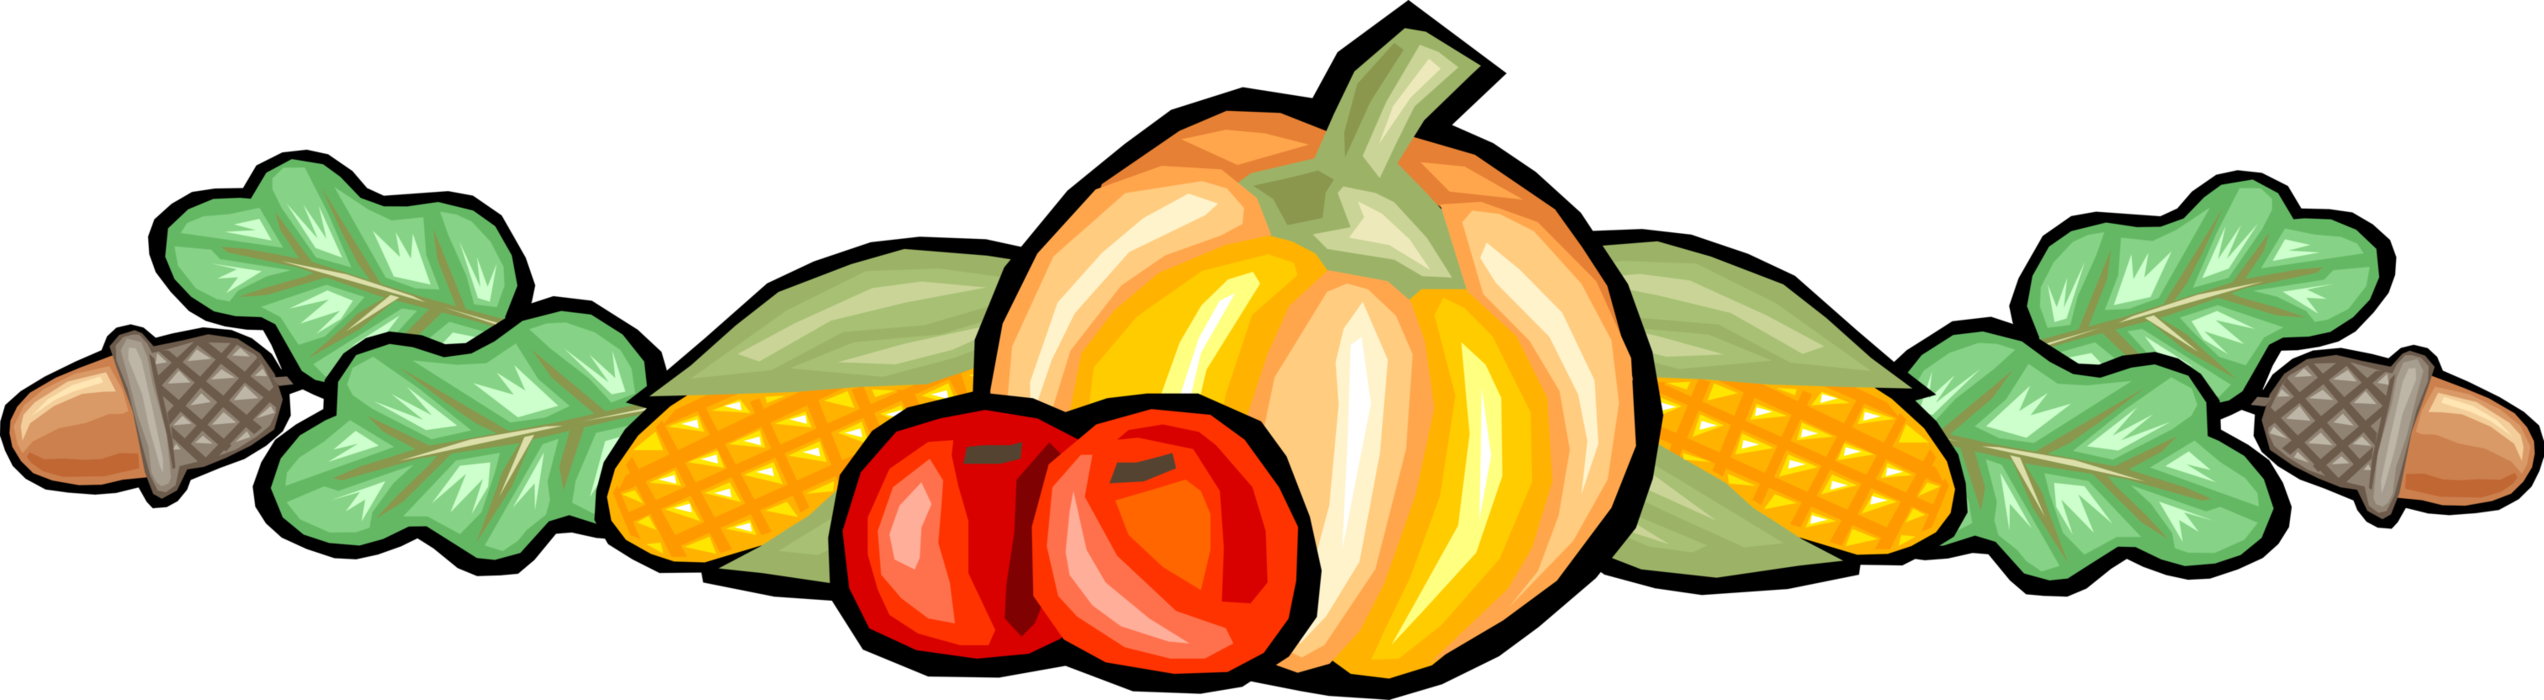 Vector Illustration of Fall or Autumn Harvest Pumpkins, Acorns, Cobs of Corn